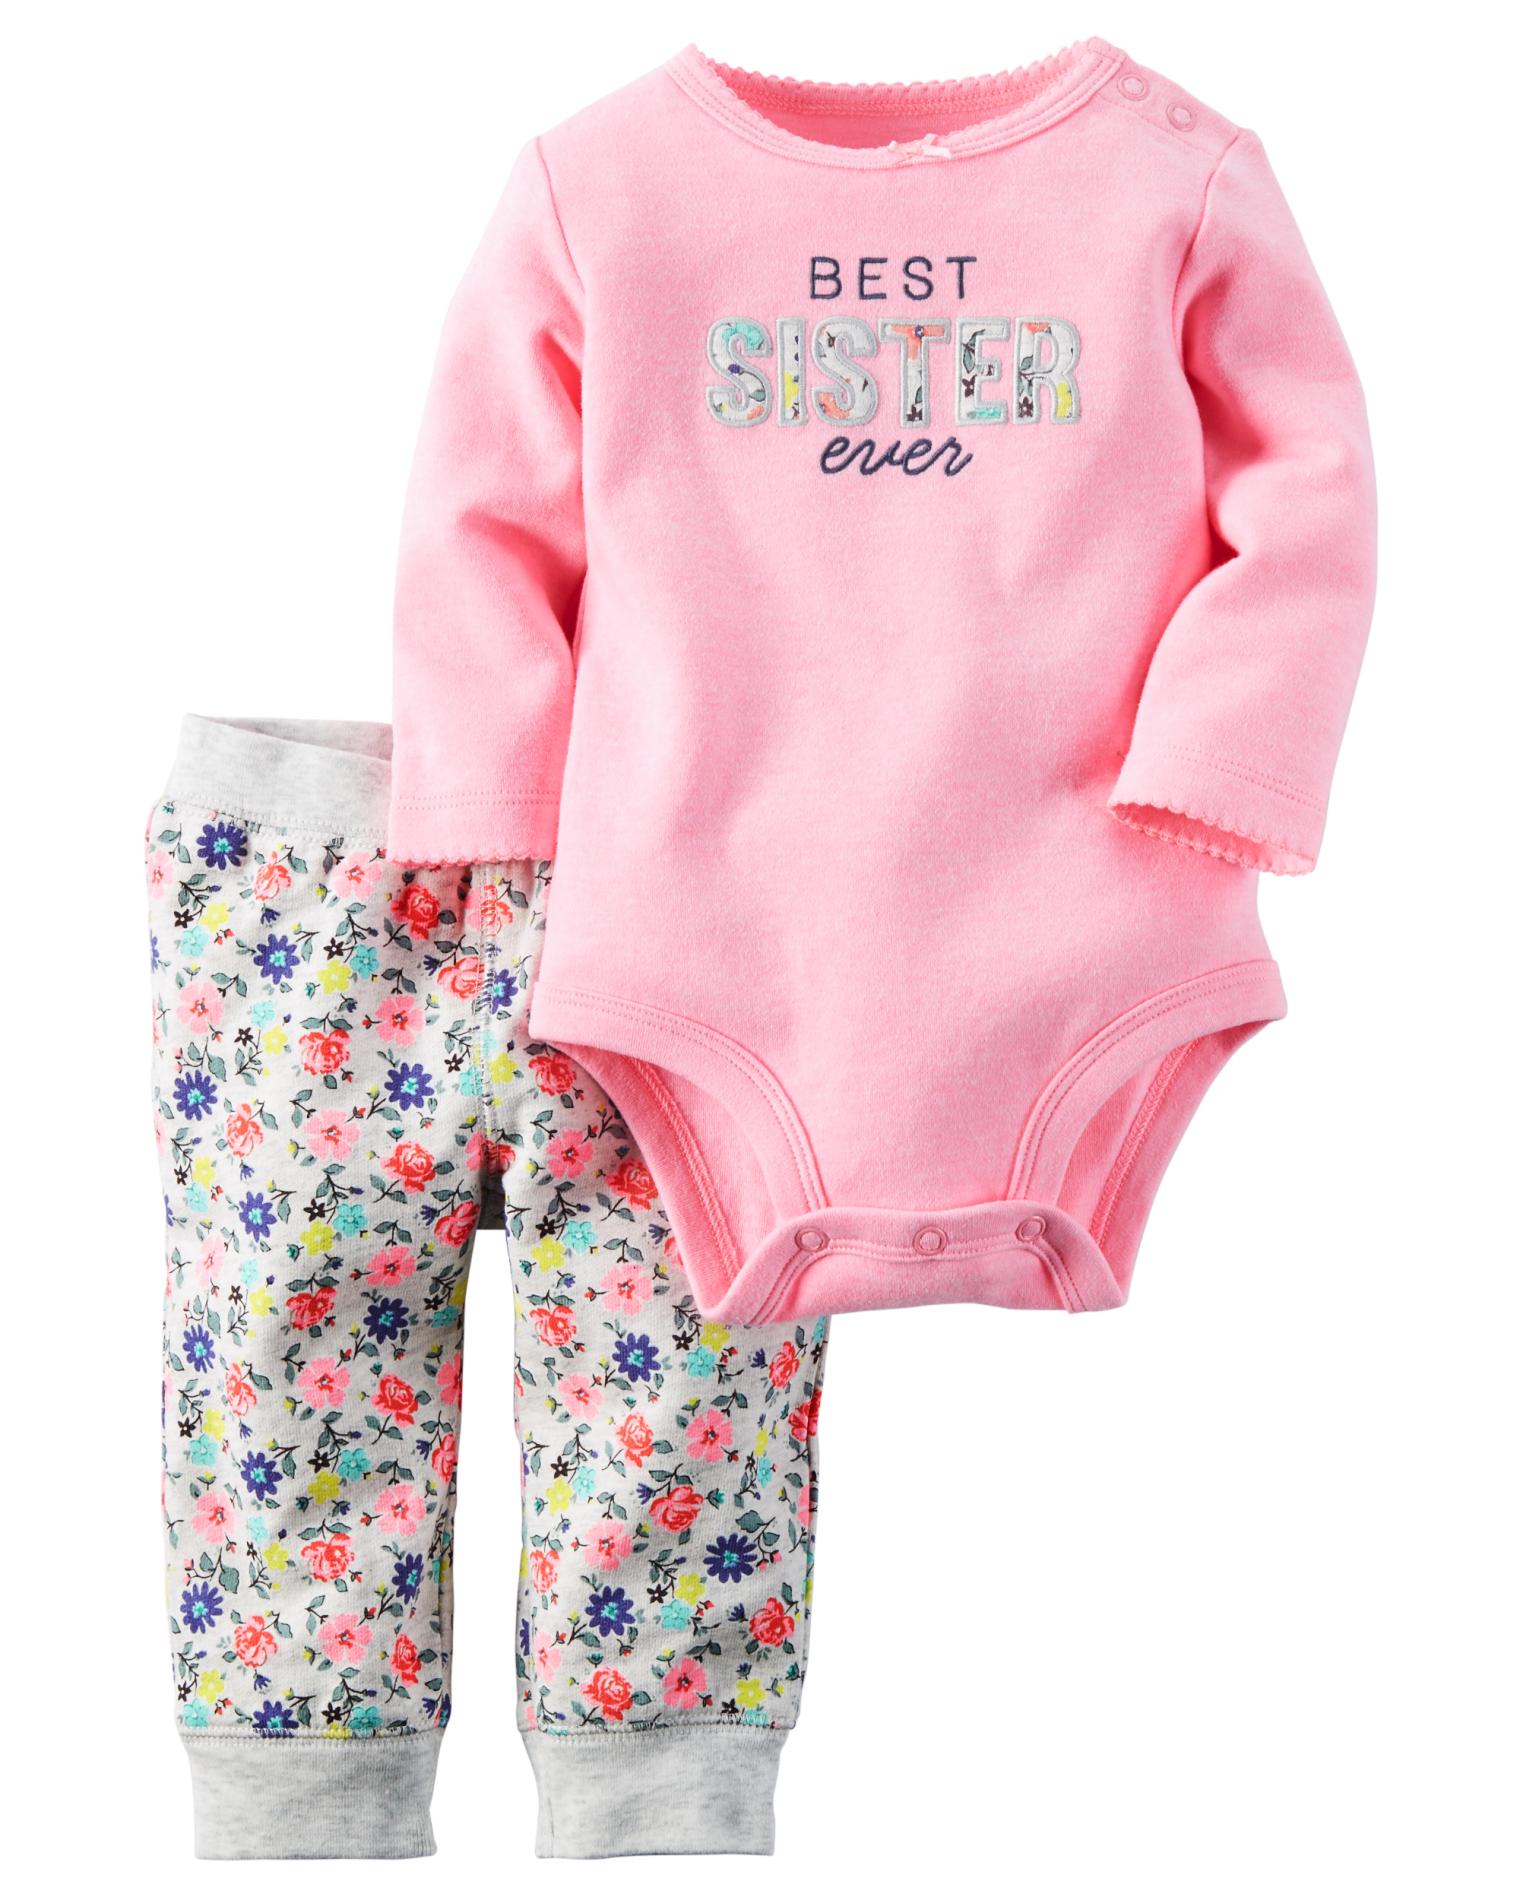 Carter's Newborn & Infant Girls' Long-Sleeve Bodysuit & Sweatpants - Best Sister